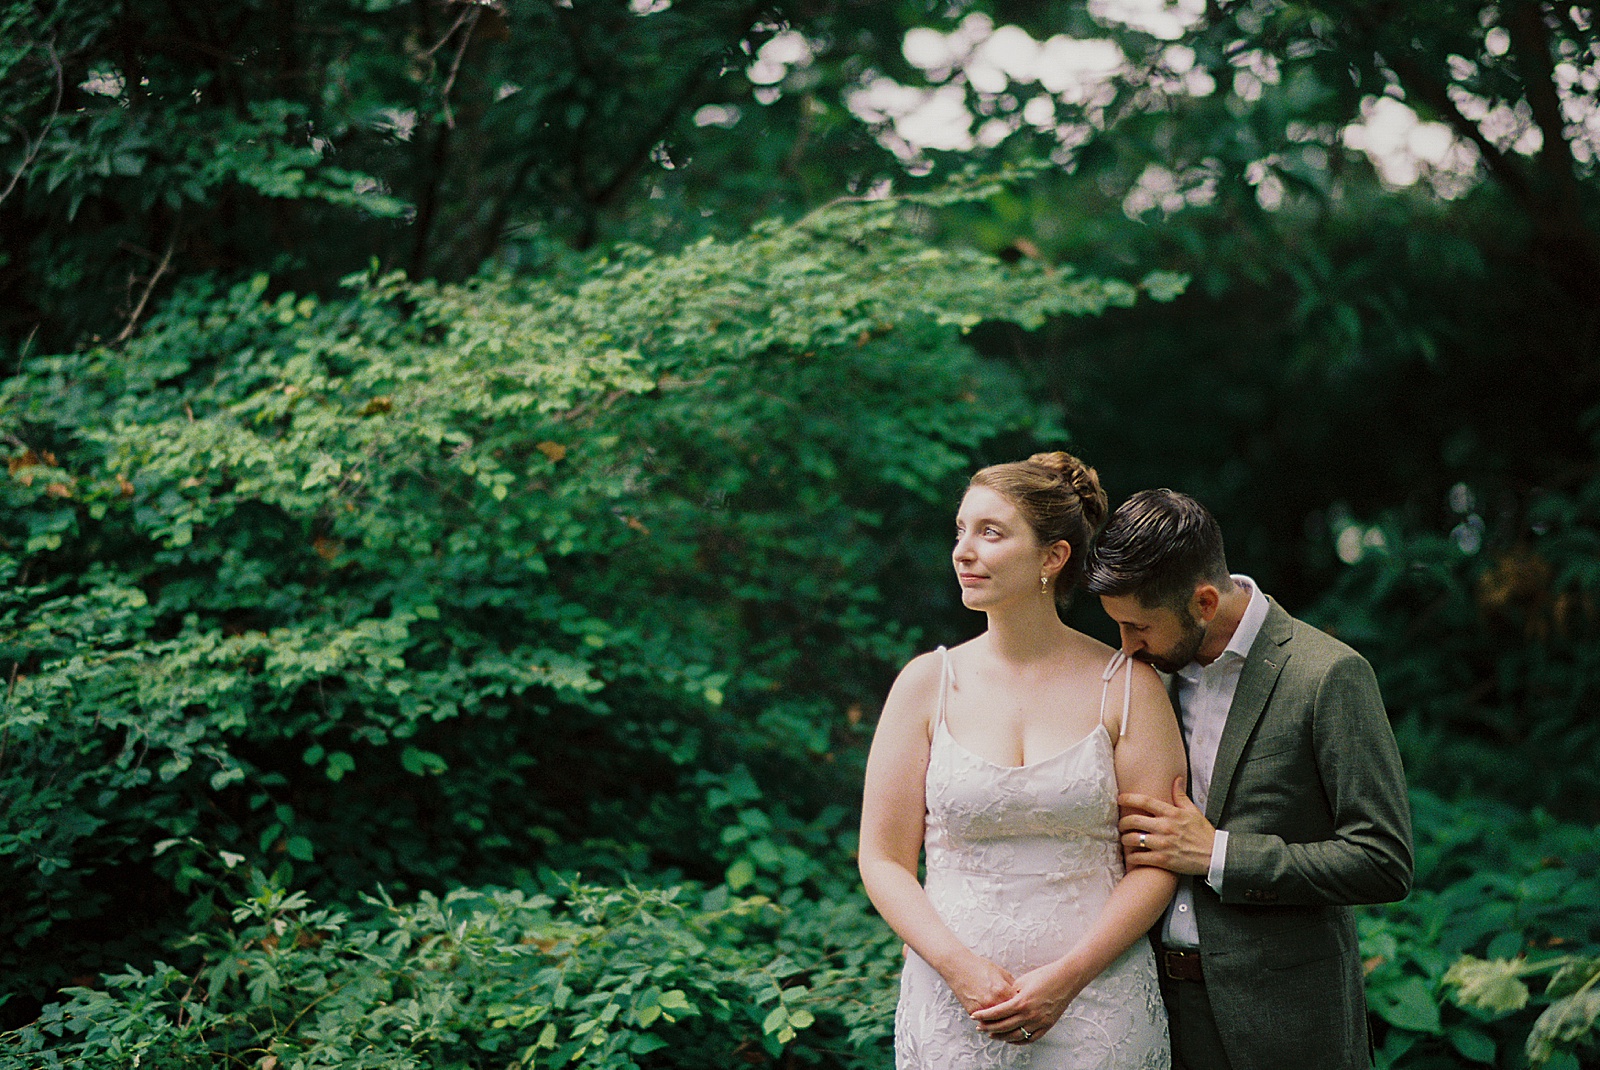 A groom kisses a bride's shoulder after their Philadelphia elopement ceremony in a park.